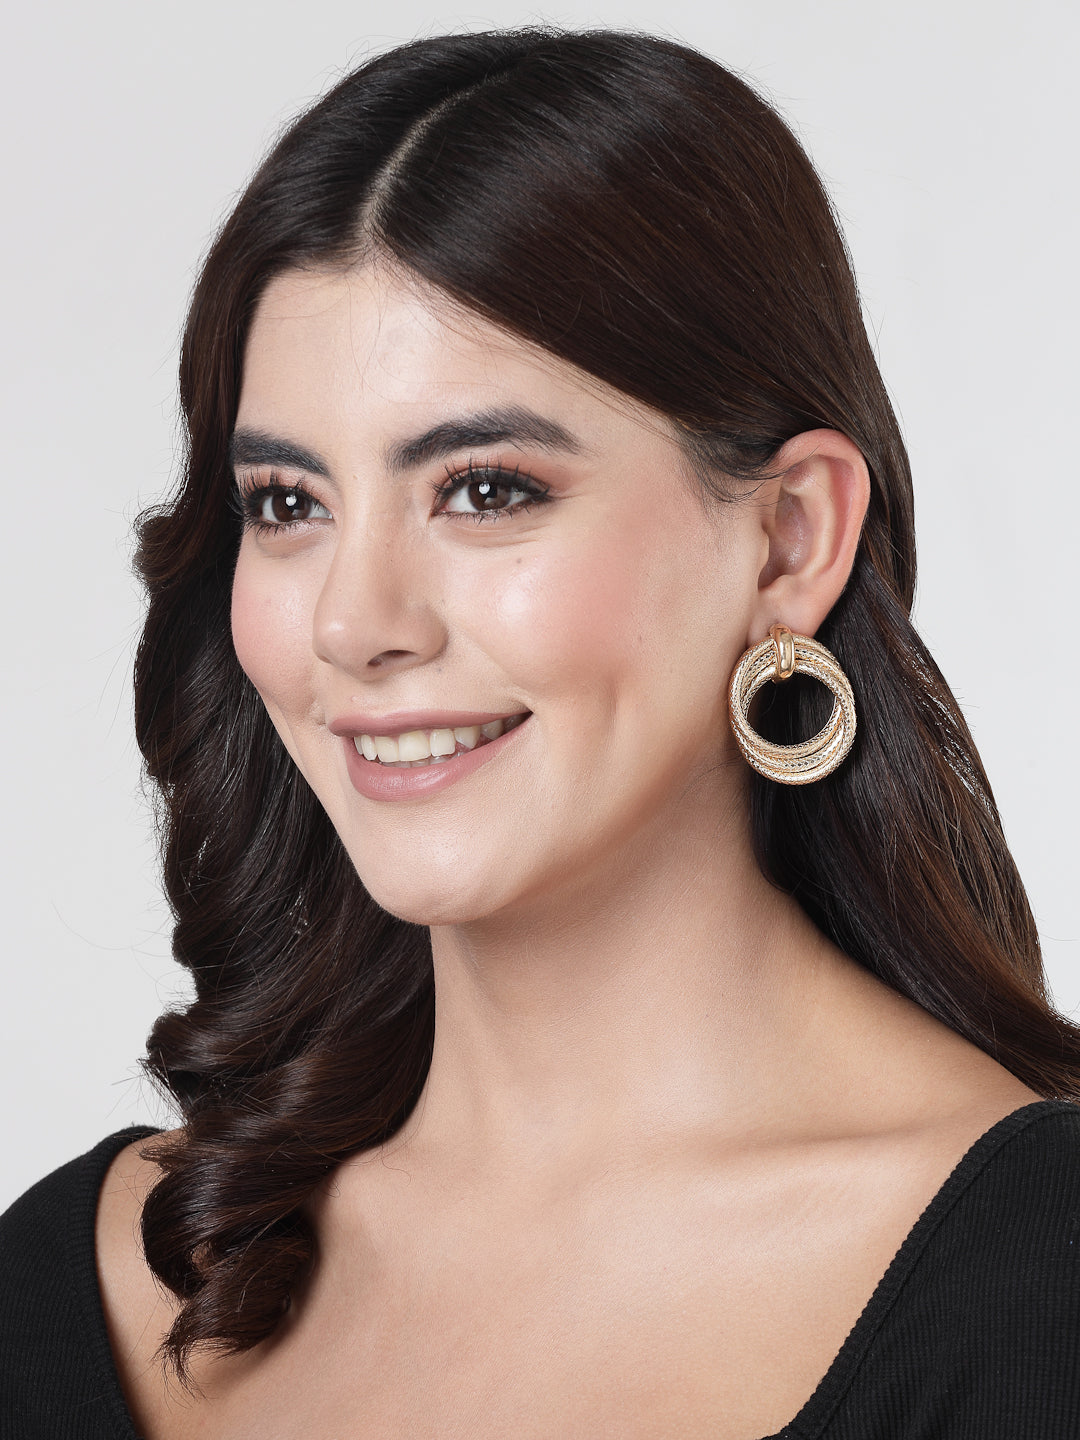 Women's Gold-Plated Hoop earrings - NVR